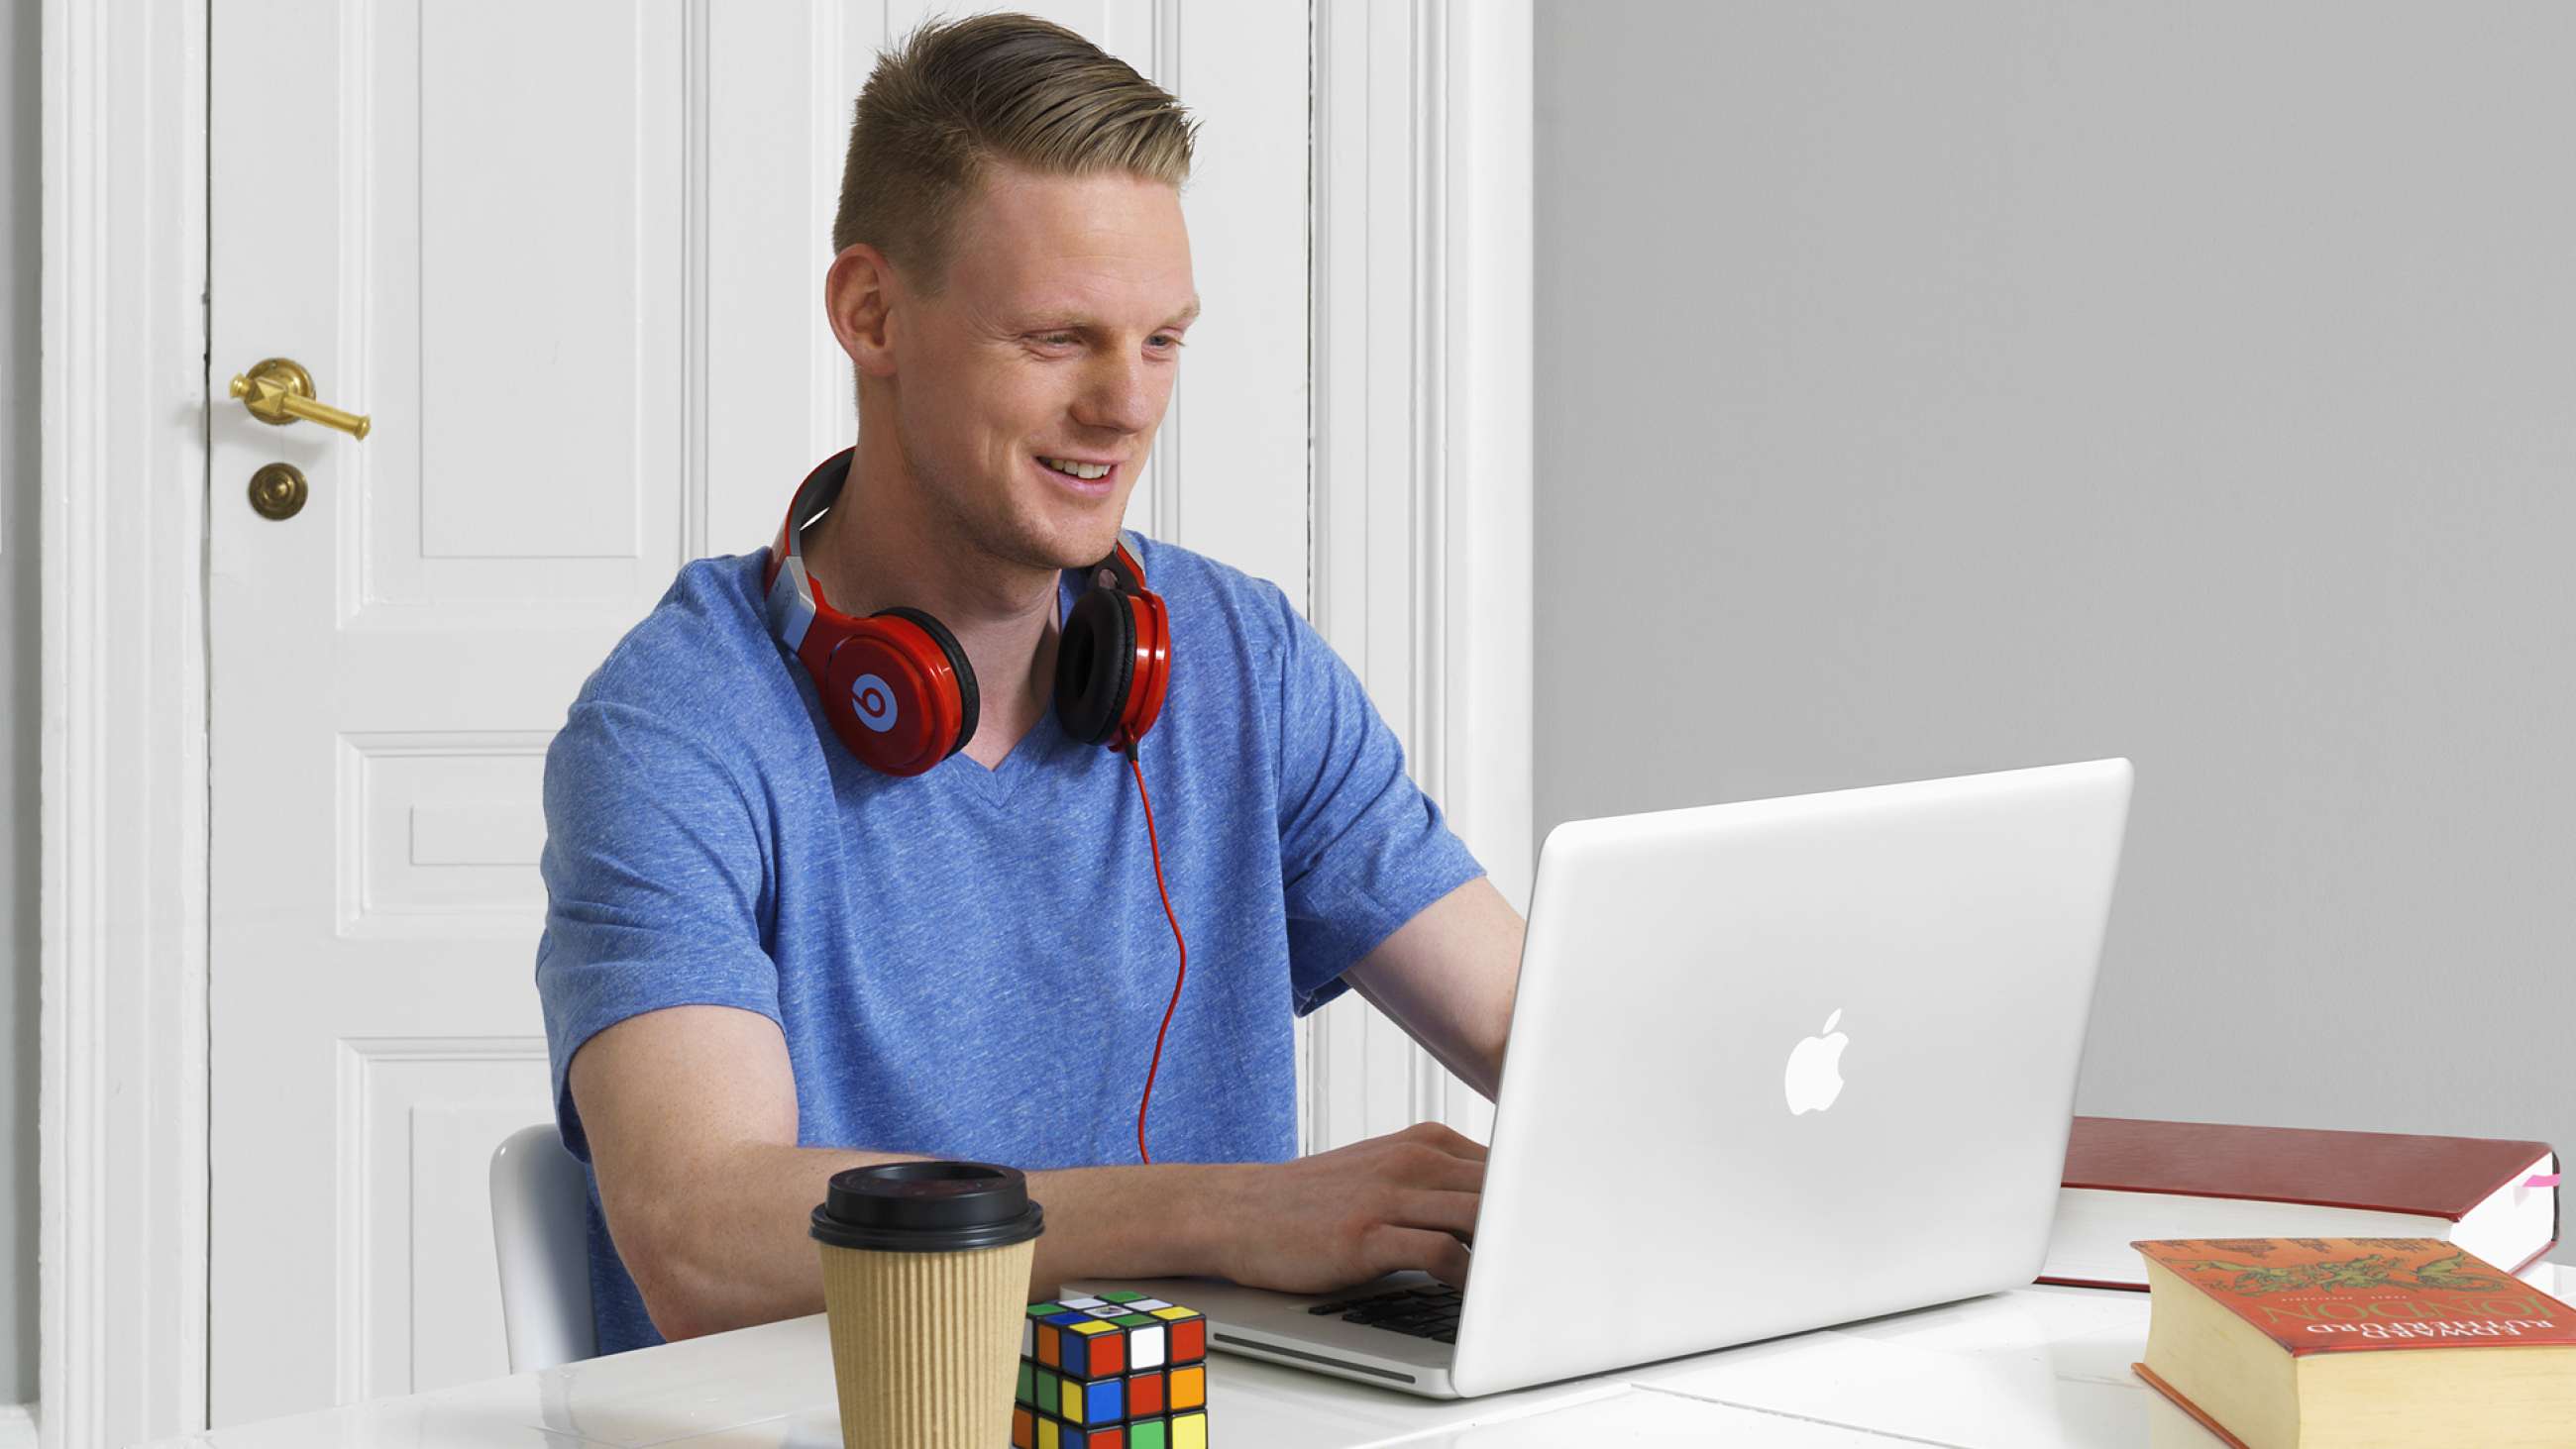 En mann med røde hodetelefoner rundt halsen som ser på en laptop